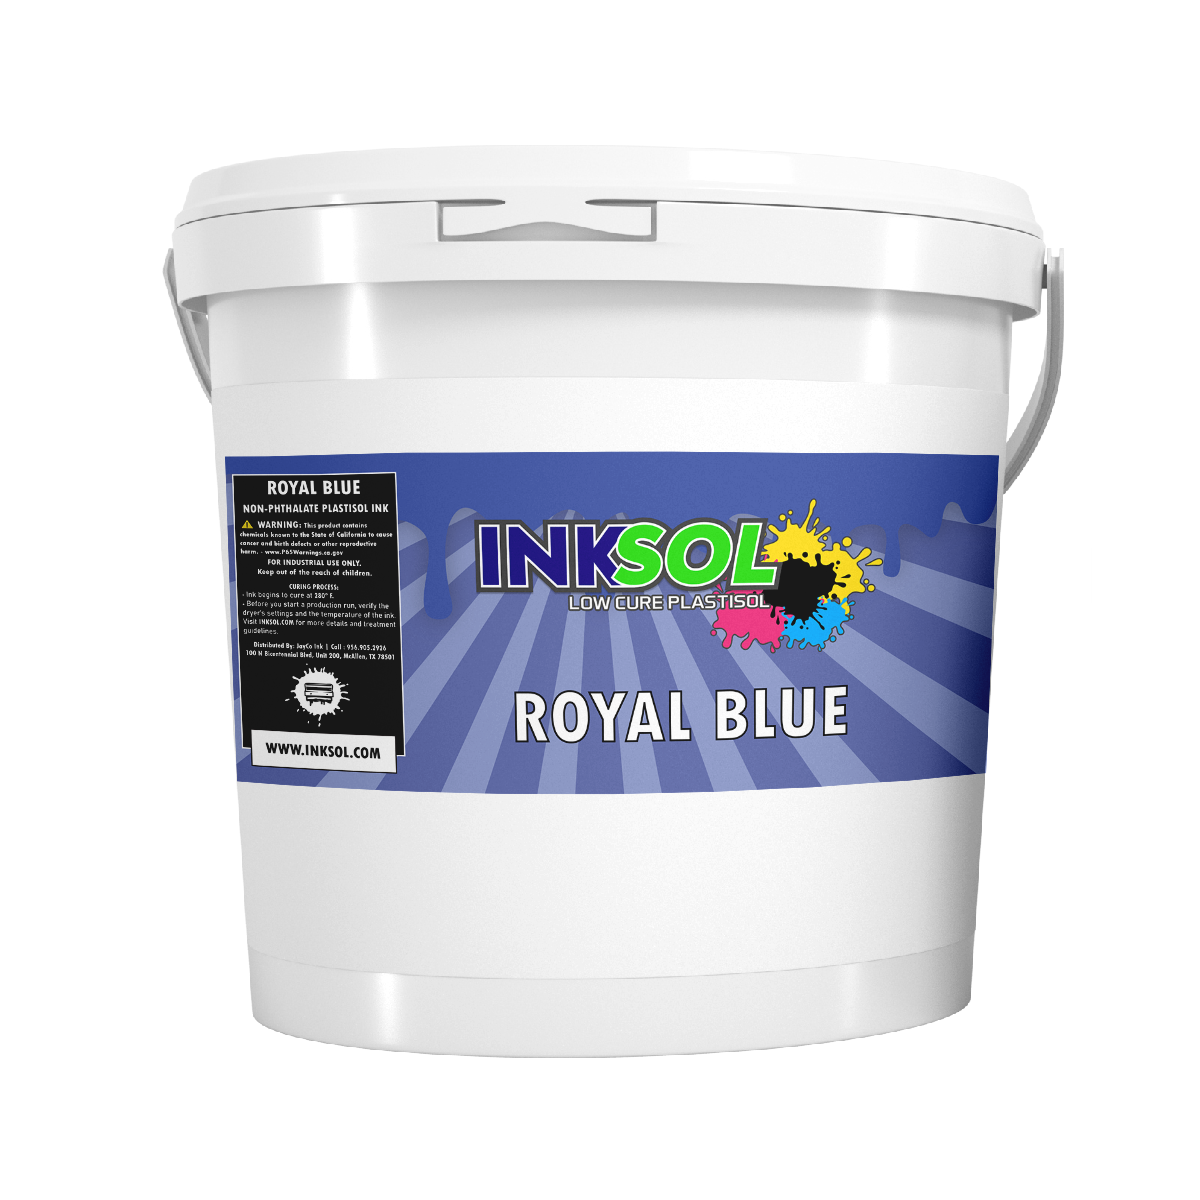 InkSol™ Low Cure Plastisol Royal Blue